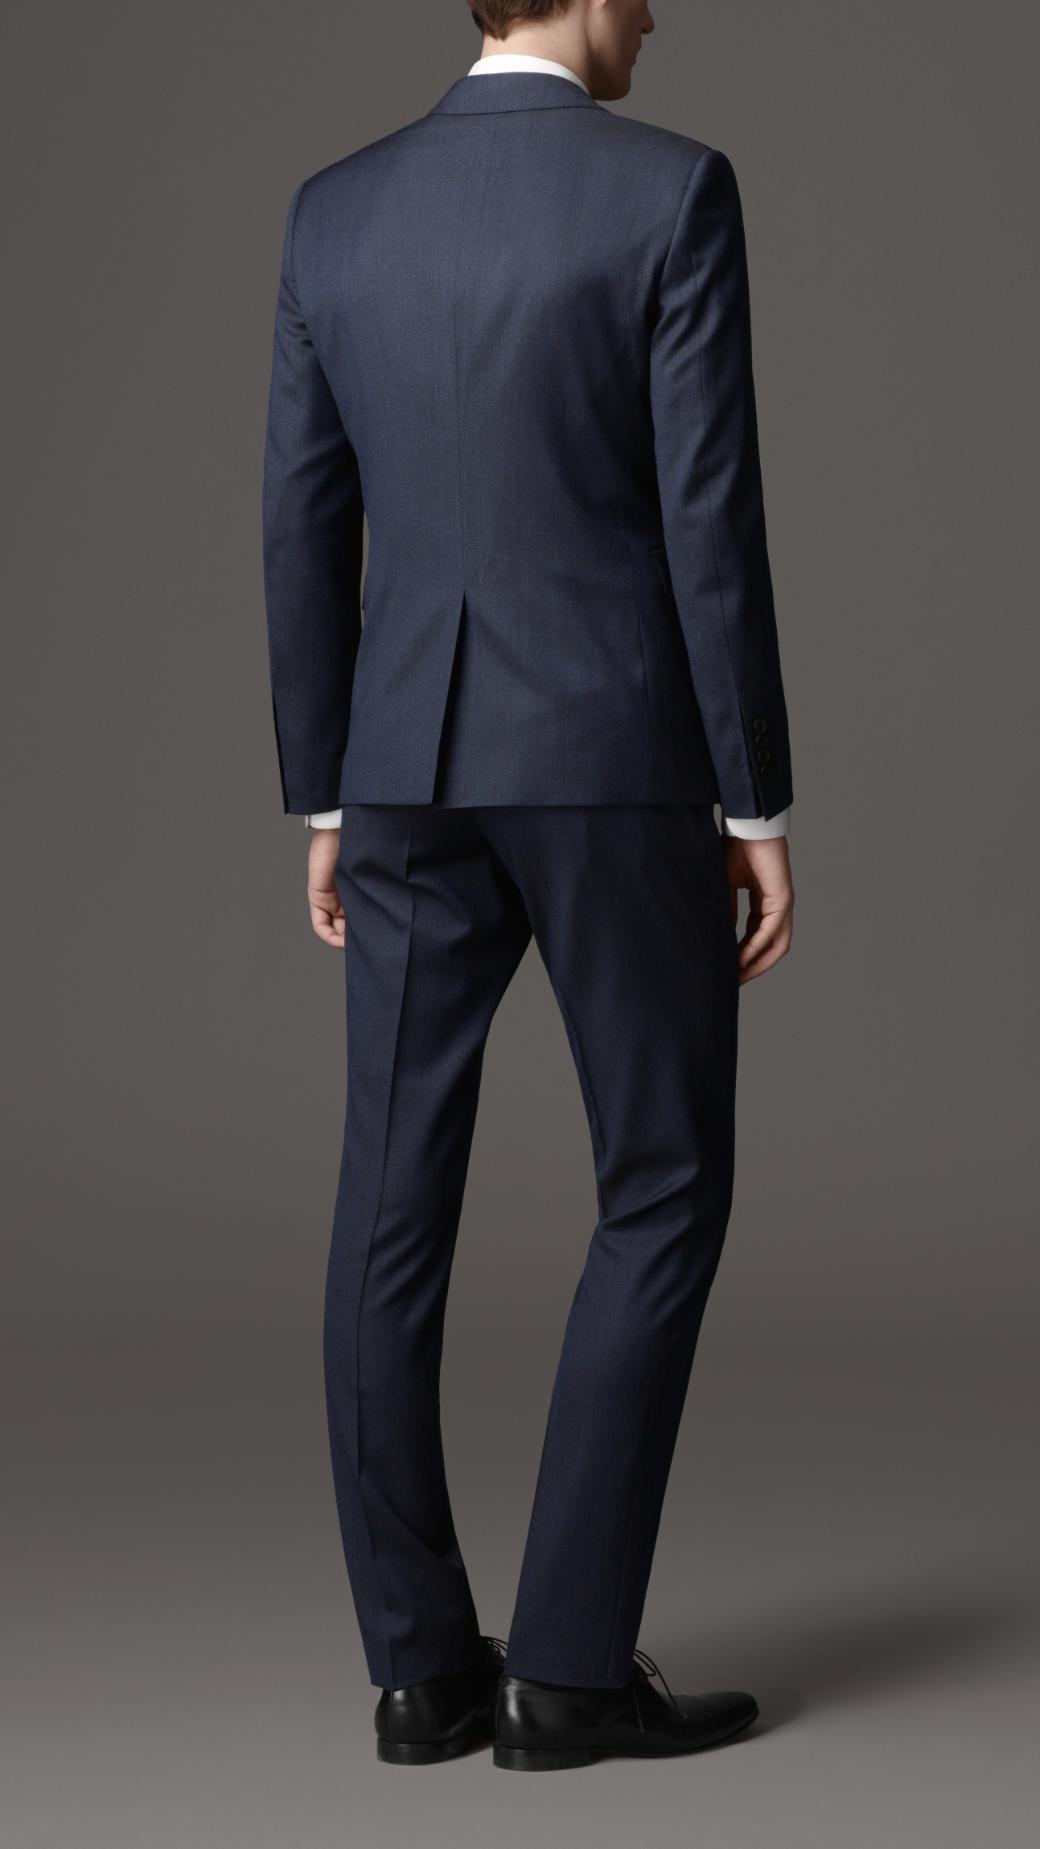 Lyst - Burberry Slim Fit Virgin Wool Suit in Blue for Men